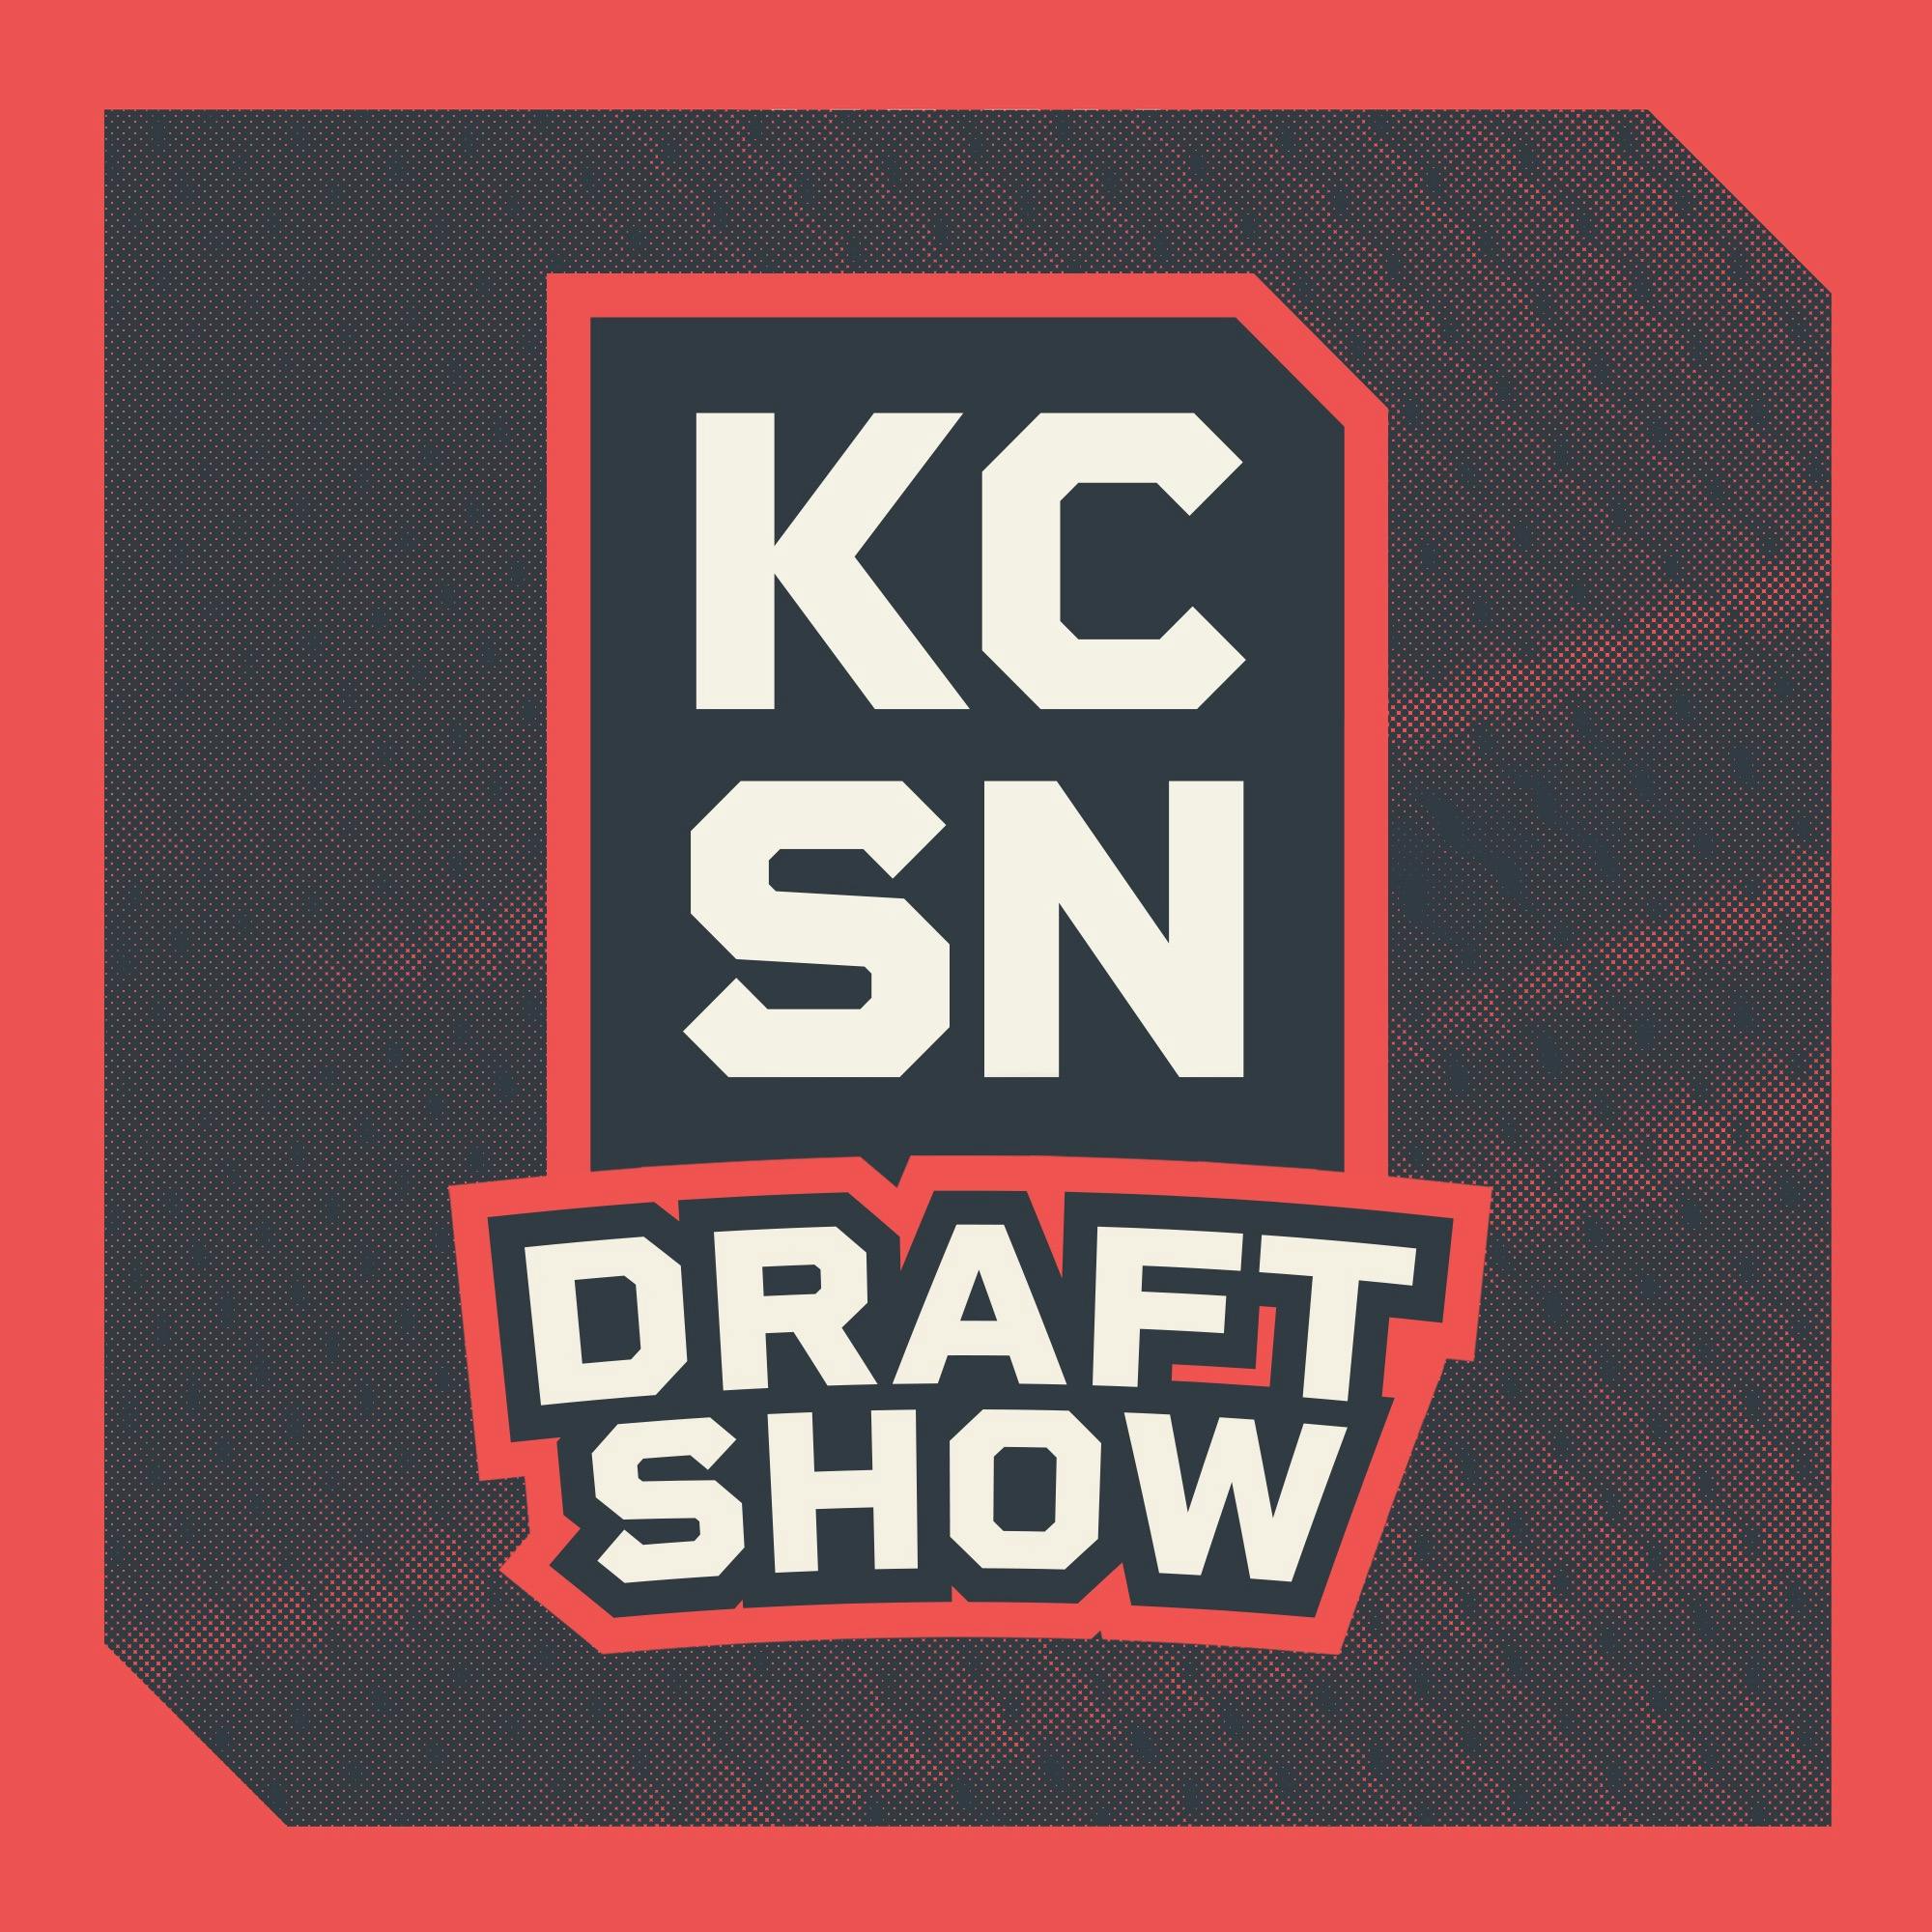 KCSN Draft Show 3/3: ESPN's Matt Miller Join Hayley Lewis to Talk Combine Process, Standouts